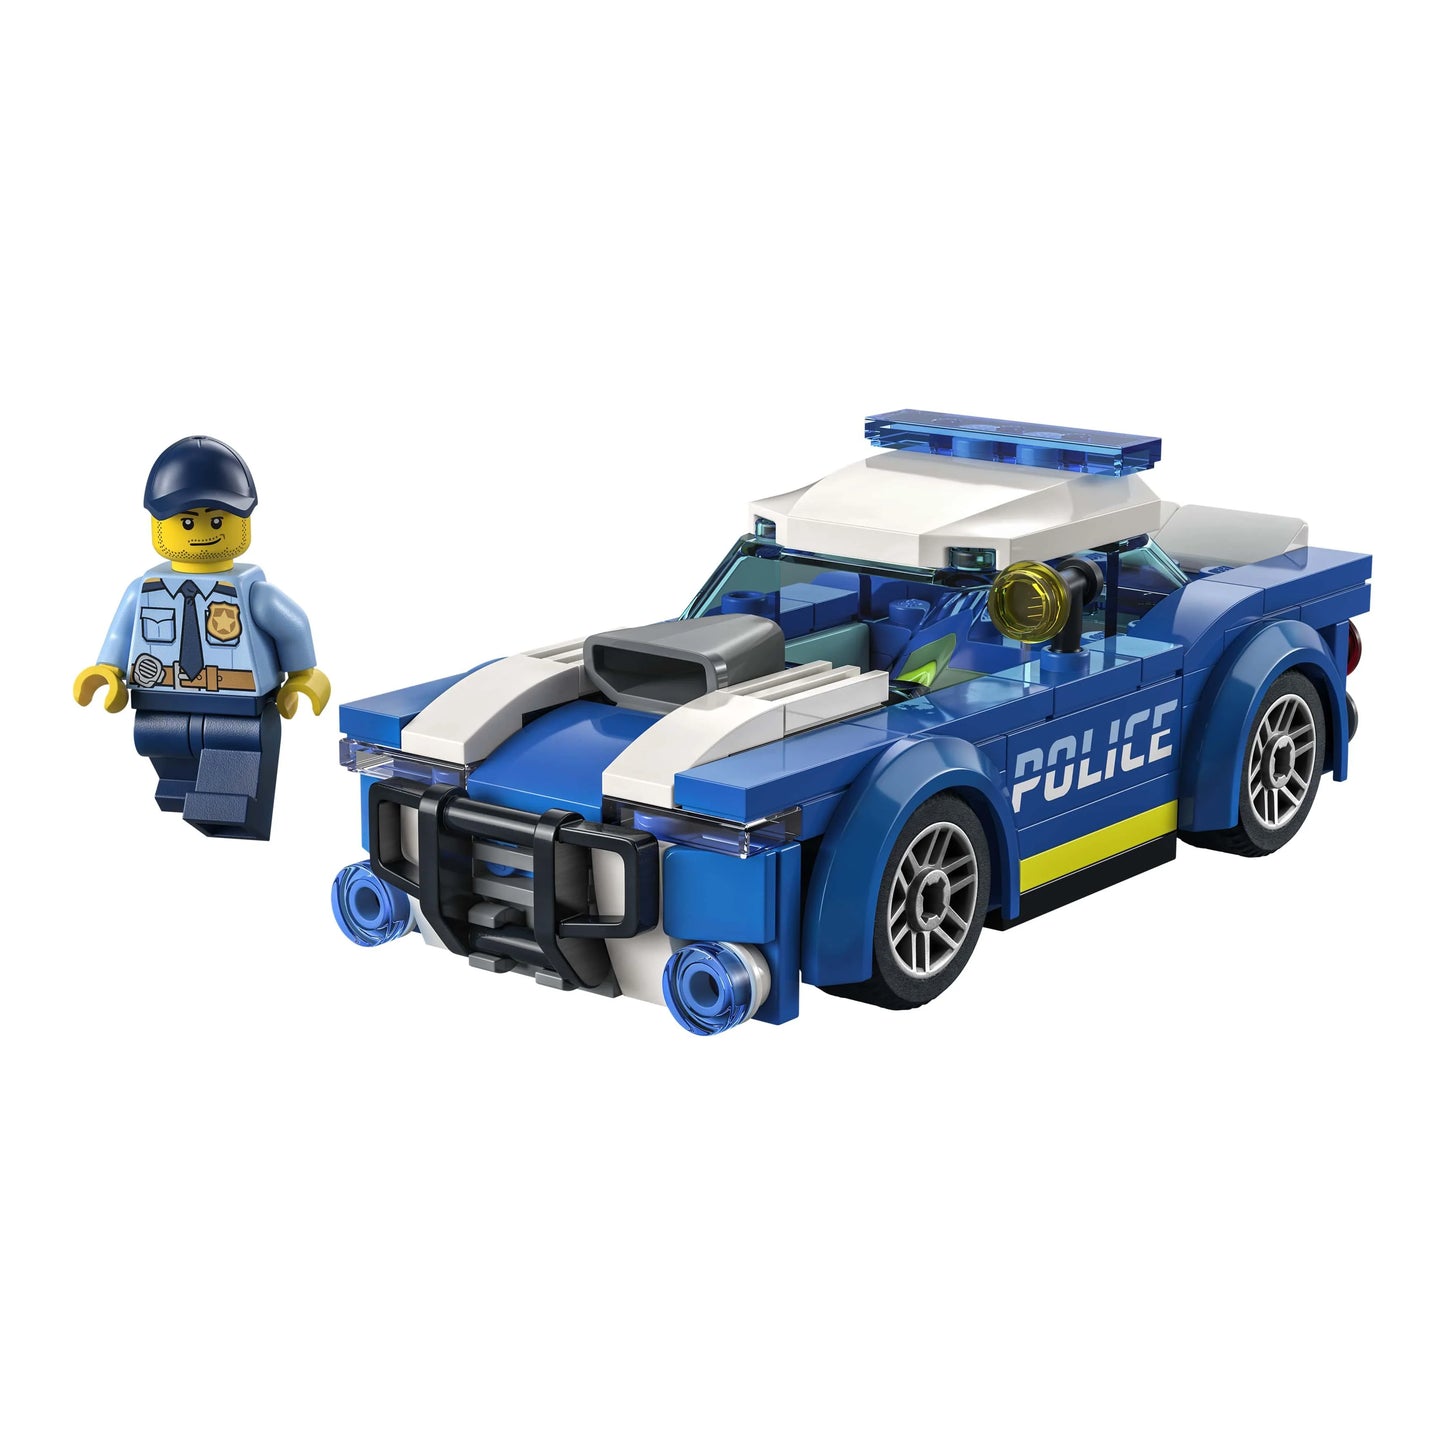 Police Car-LEGO City